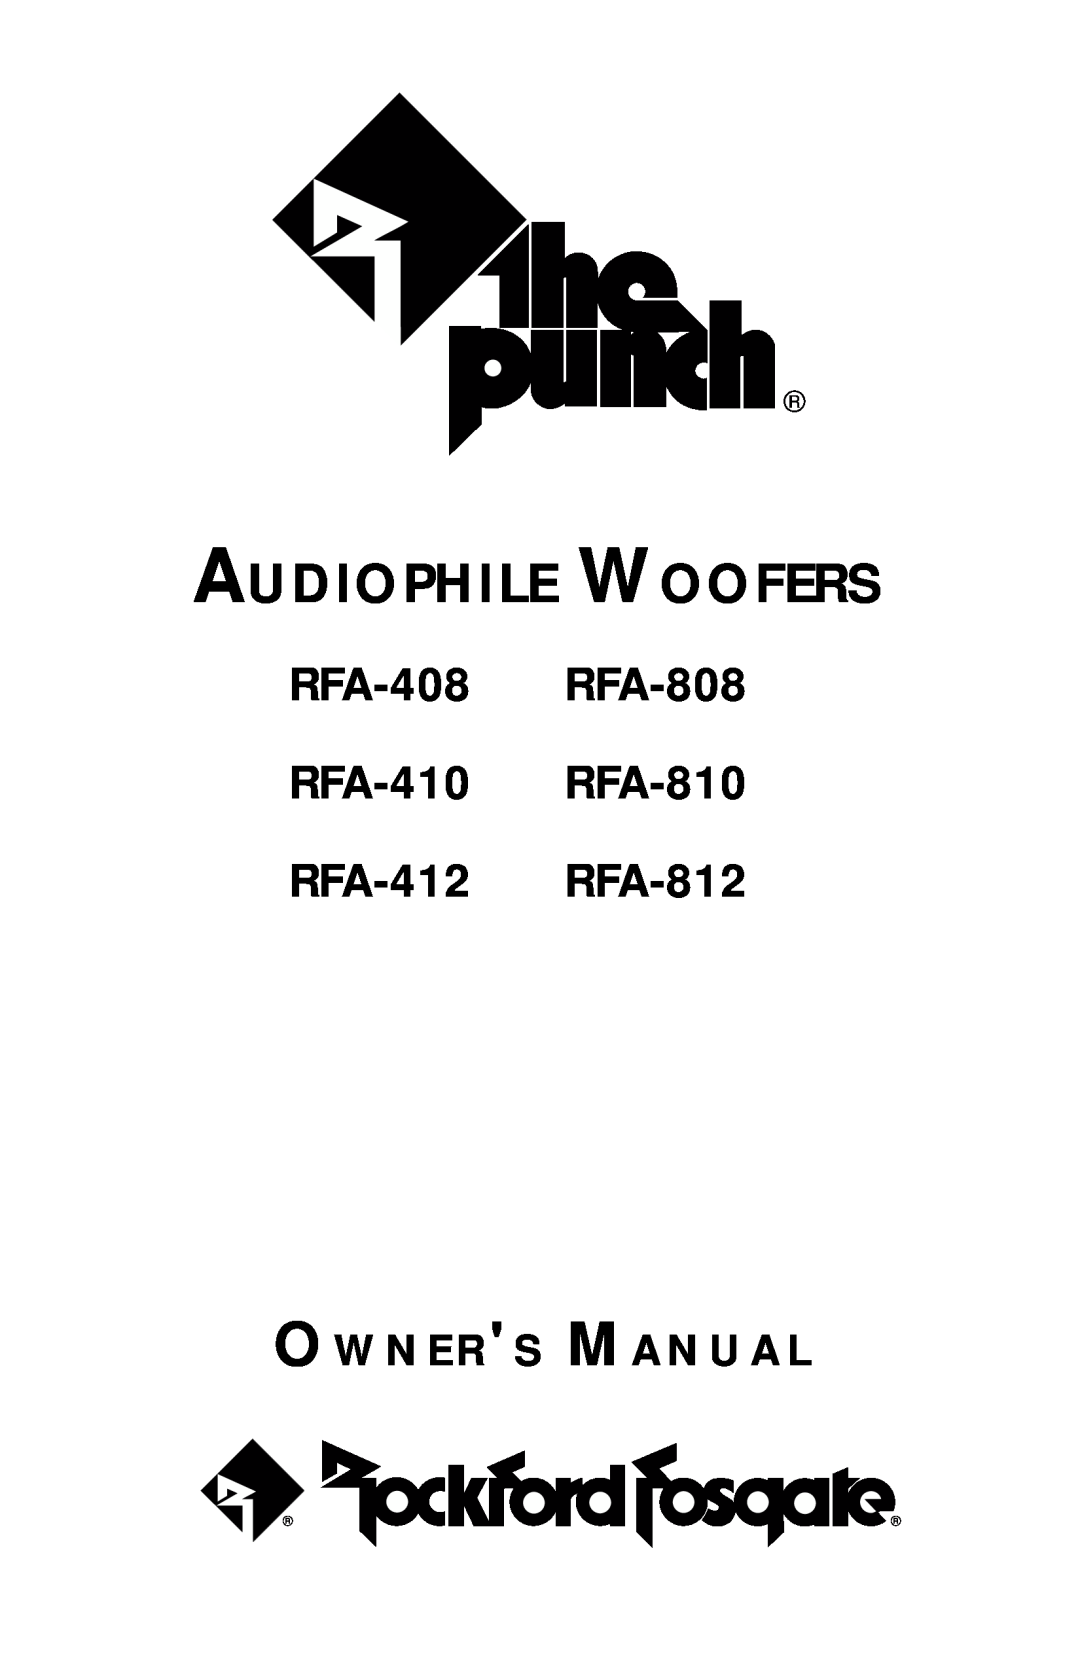 Rockford Fosgate owner manual RFA-408 RFA-808 RFA-410 RFA-810 RFA-412 RFA-812, Audiophile Woofers 